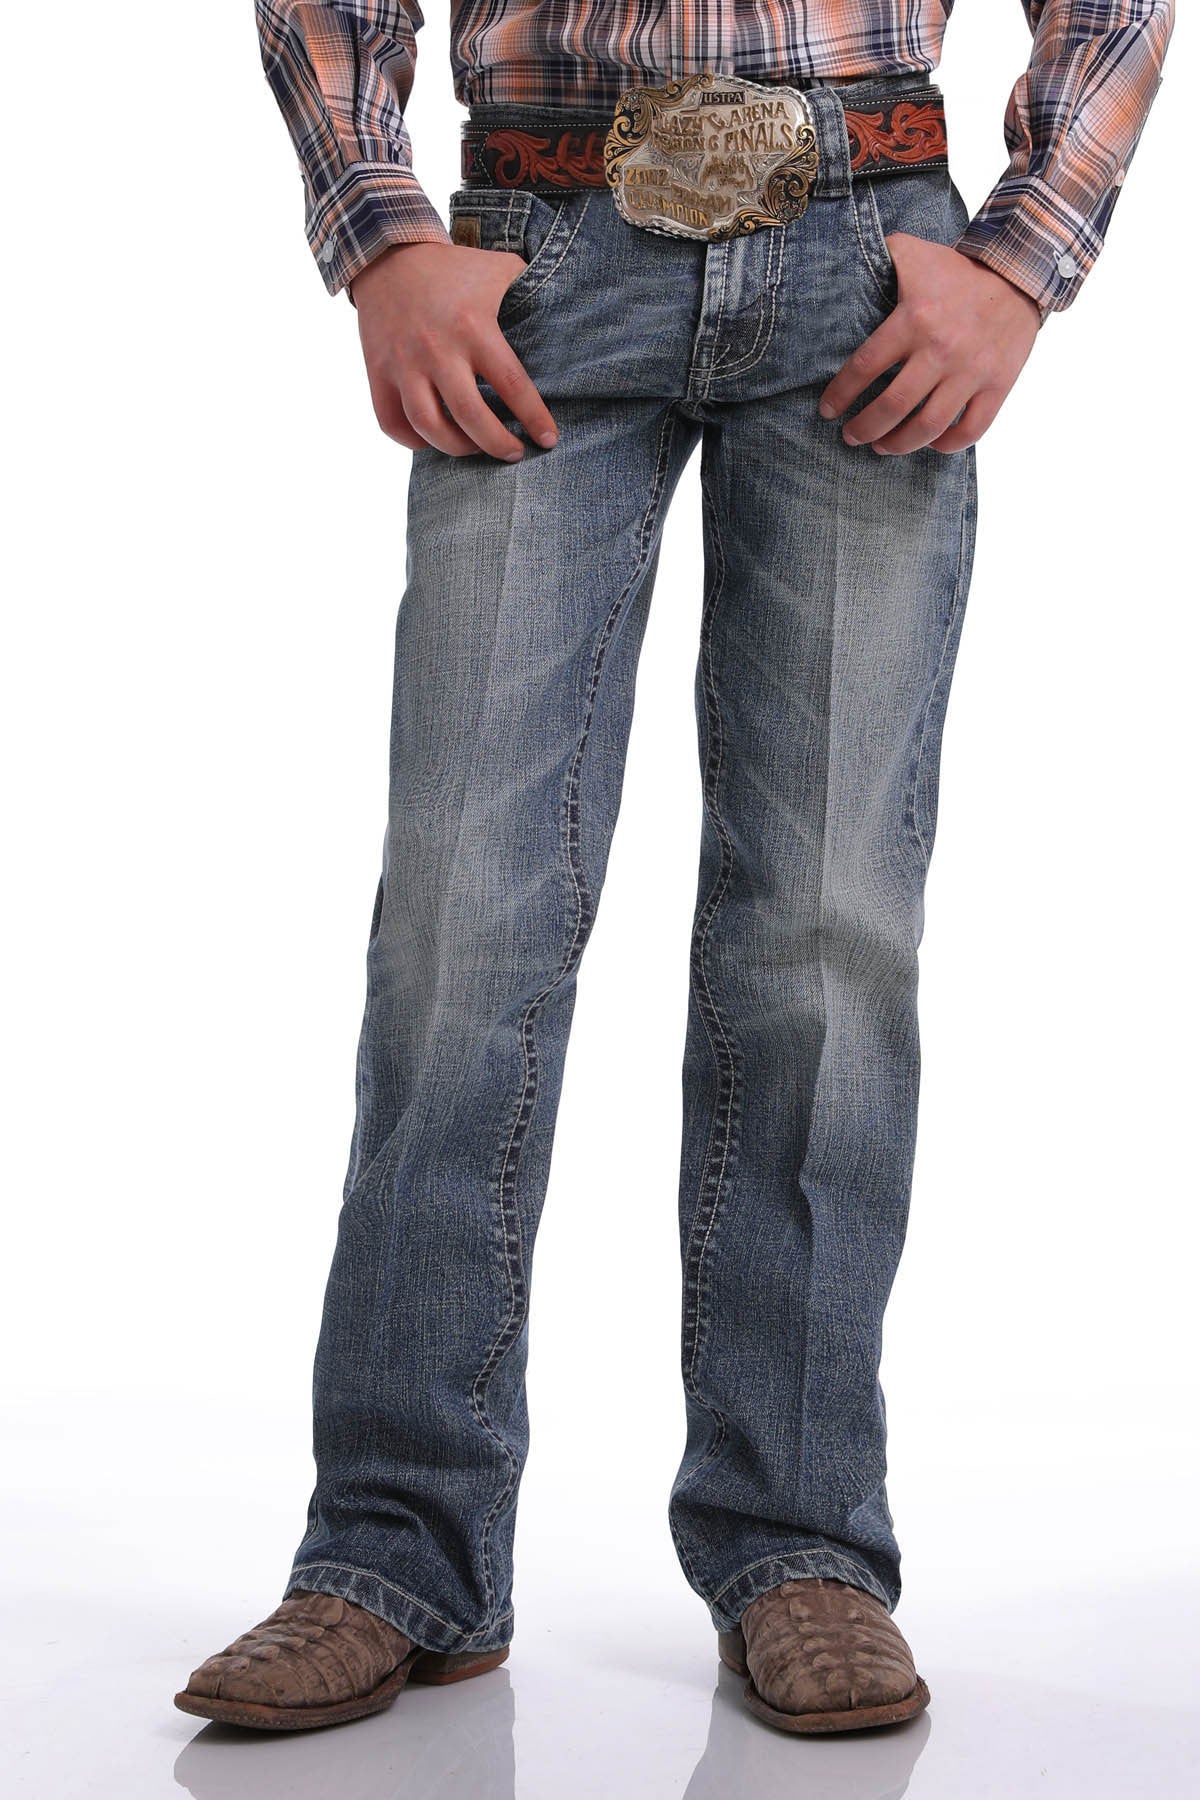 Cinch Boy's Indigo Slim Fit Jeans